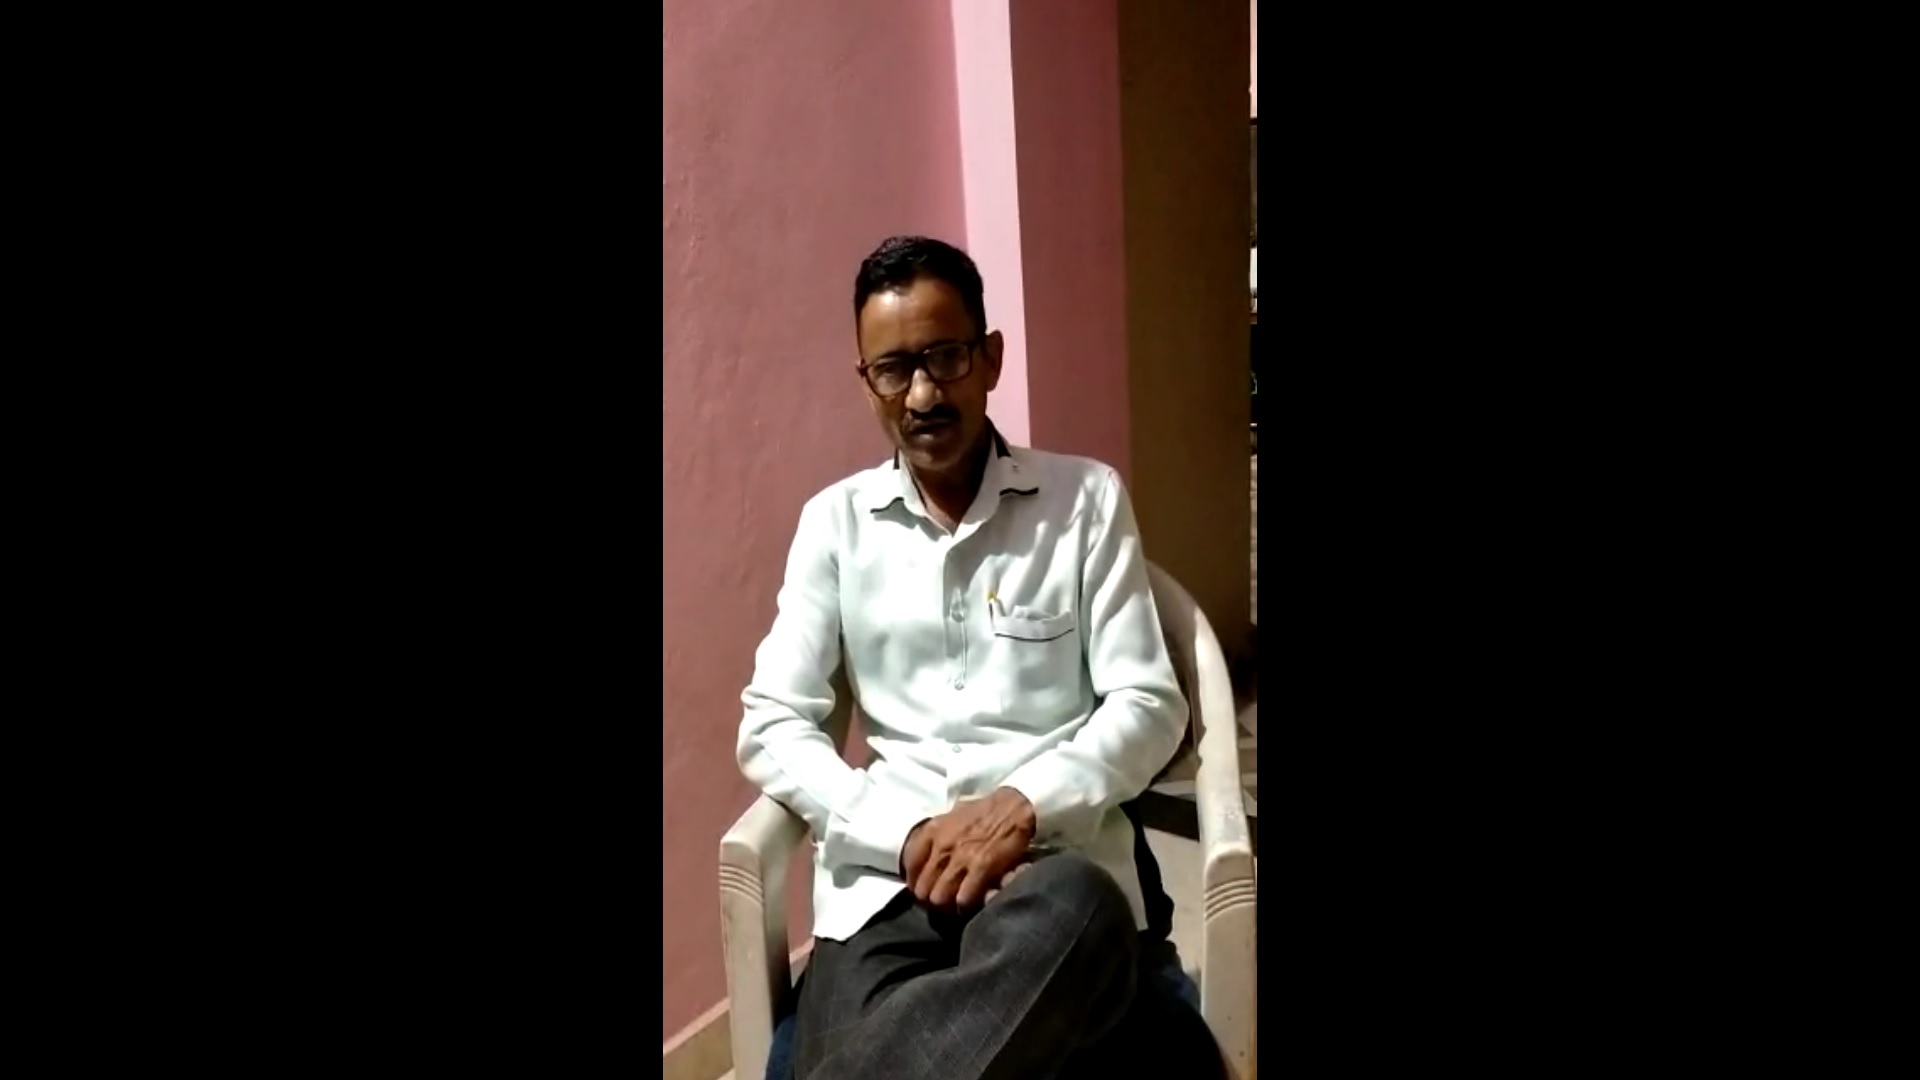 Rangarav Bhonsle from Kolhapur/Coviid Positive